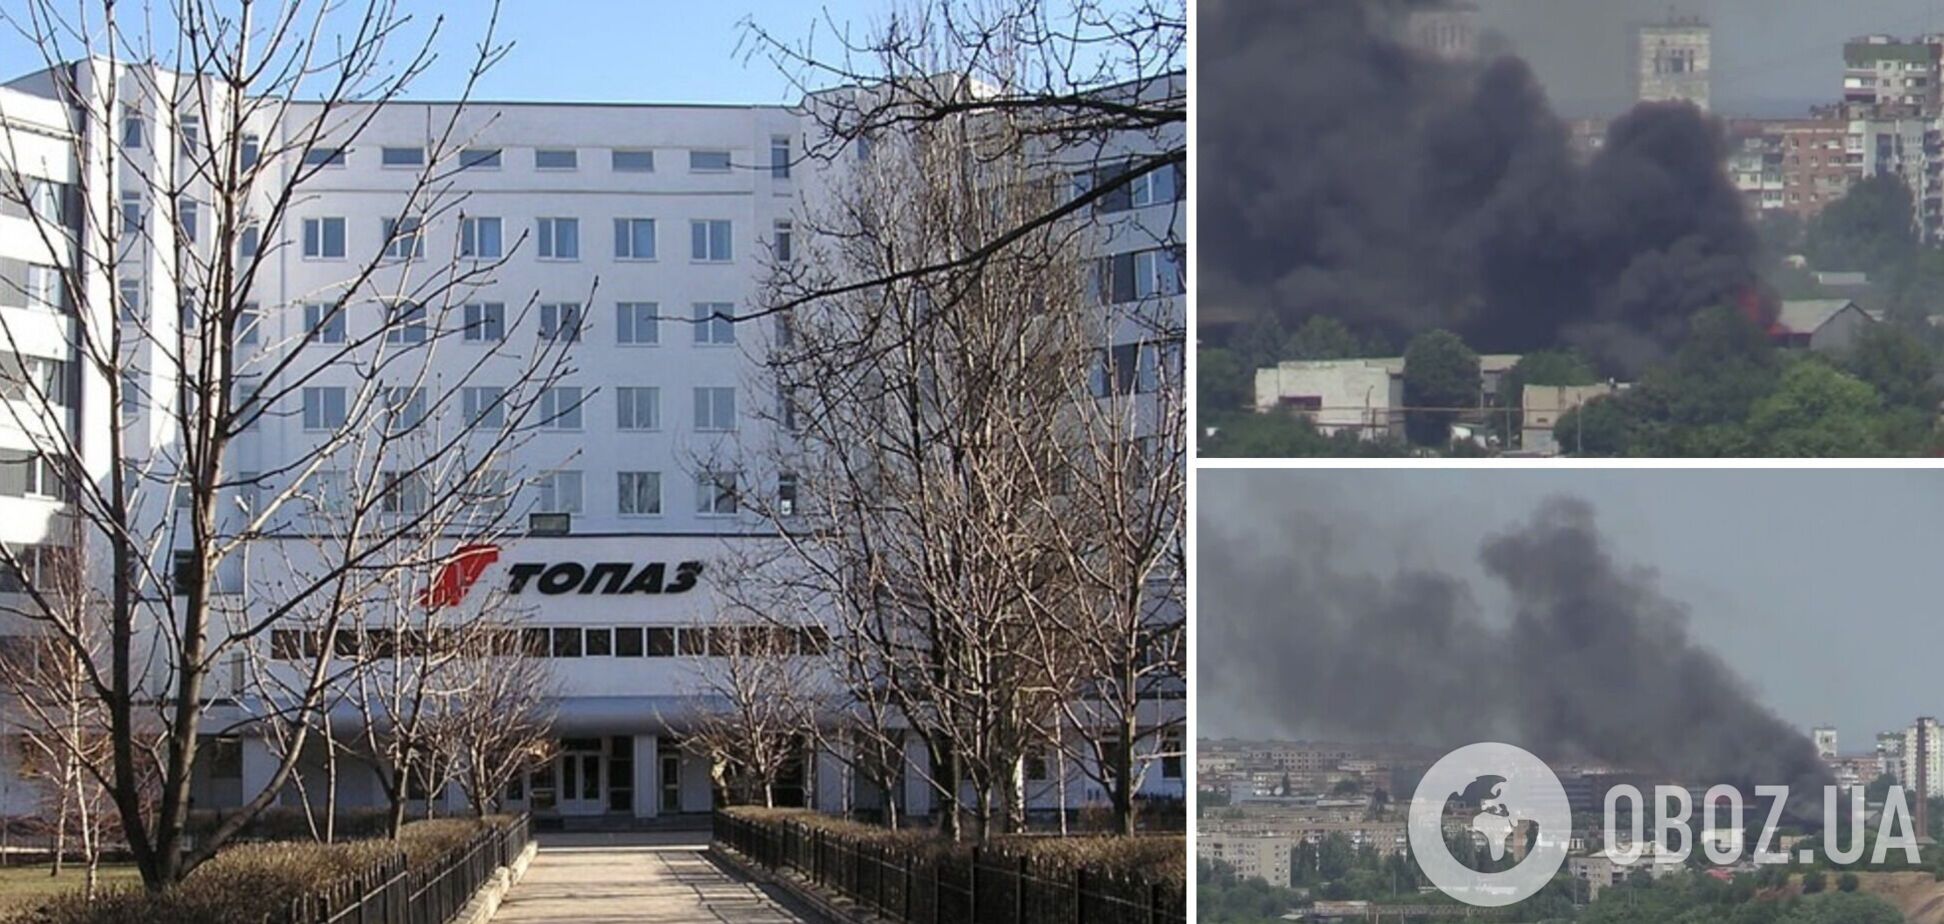 Поблизу заводу 'Топаз' у Донецьку спалахнула пожежа